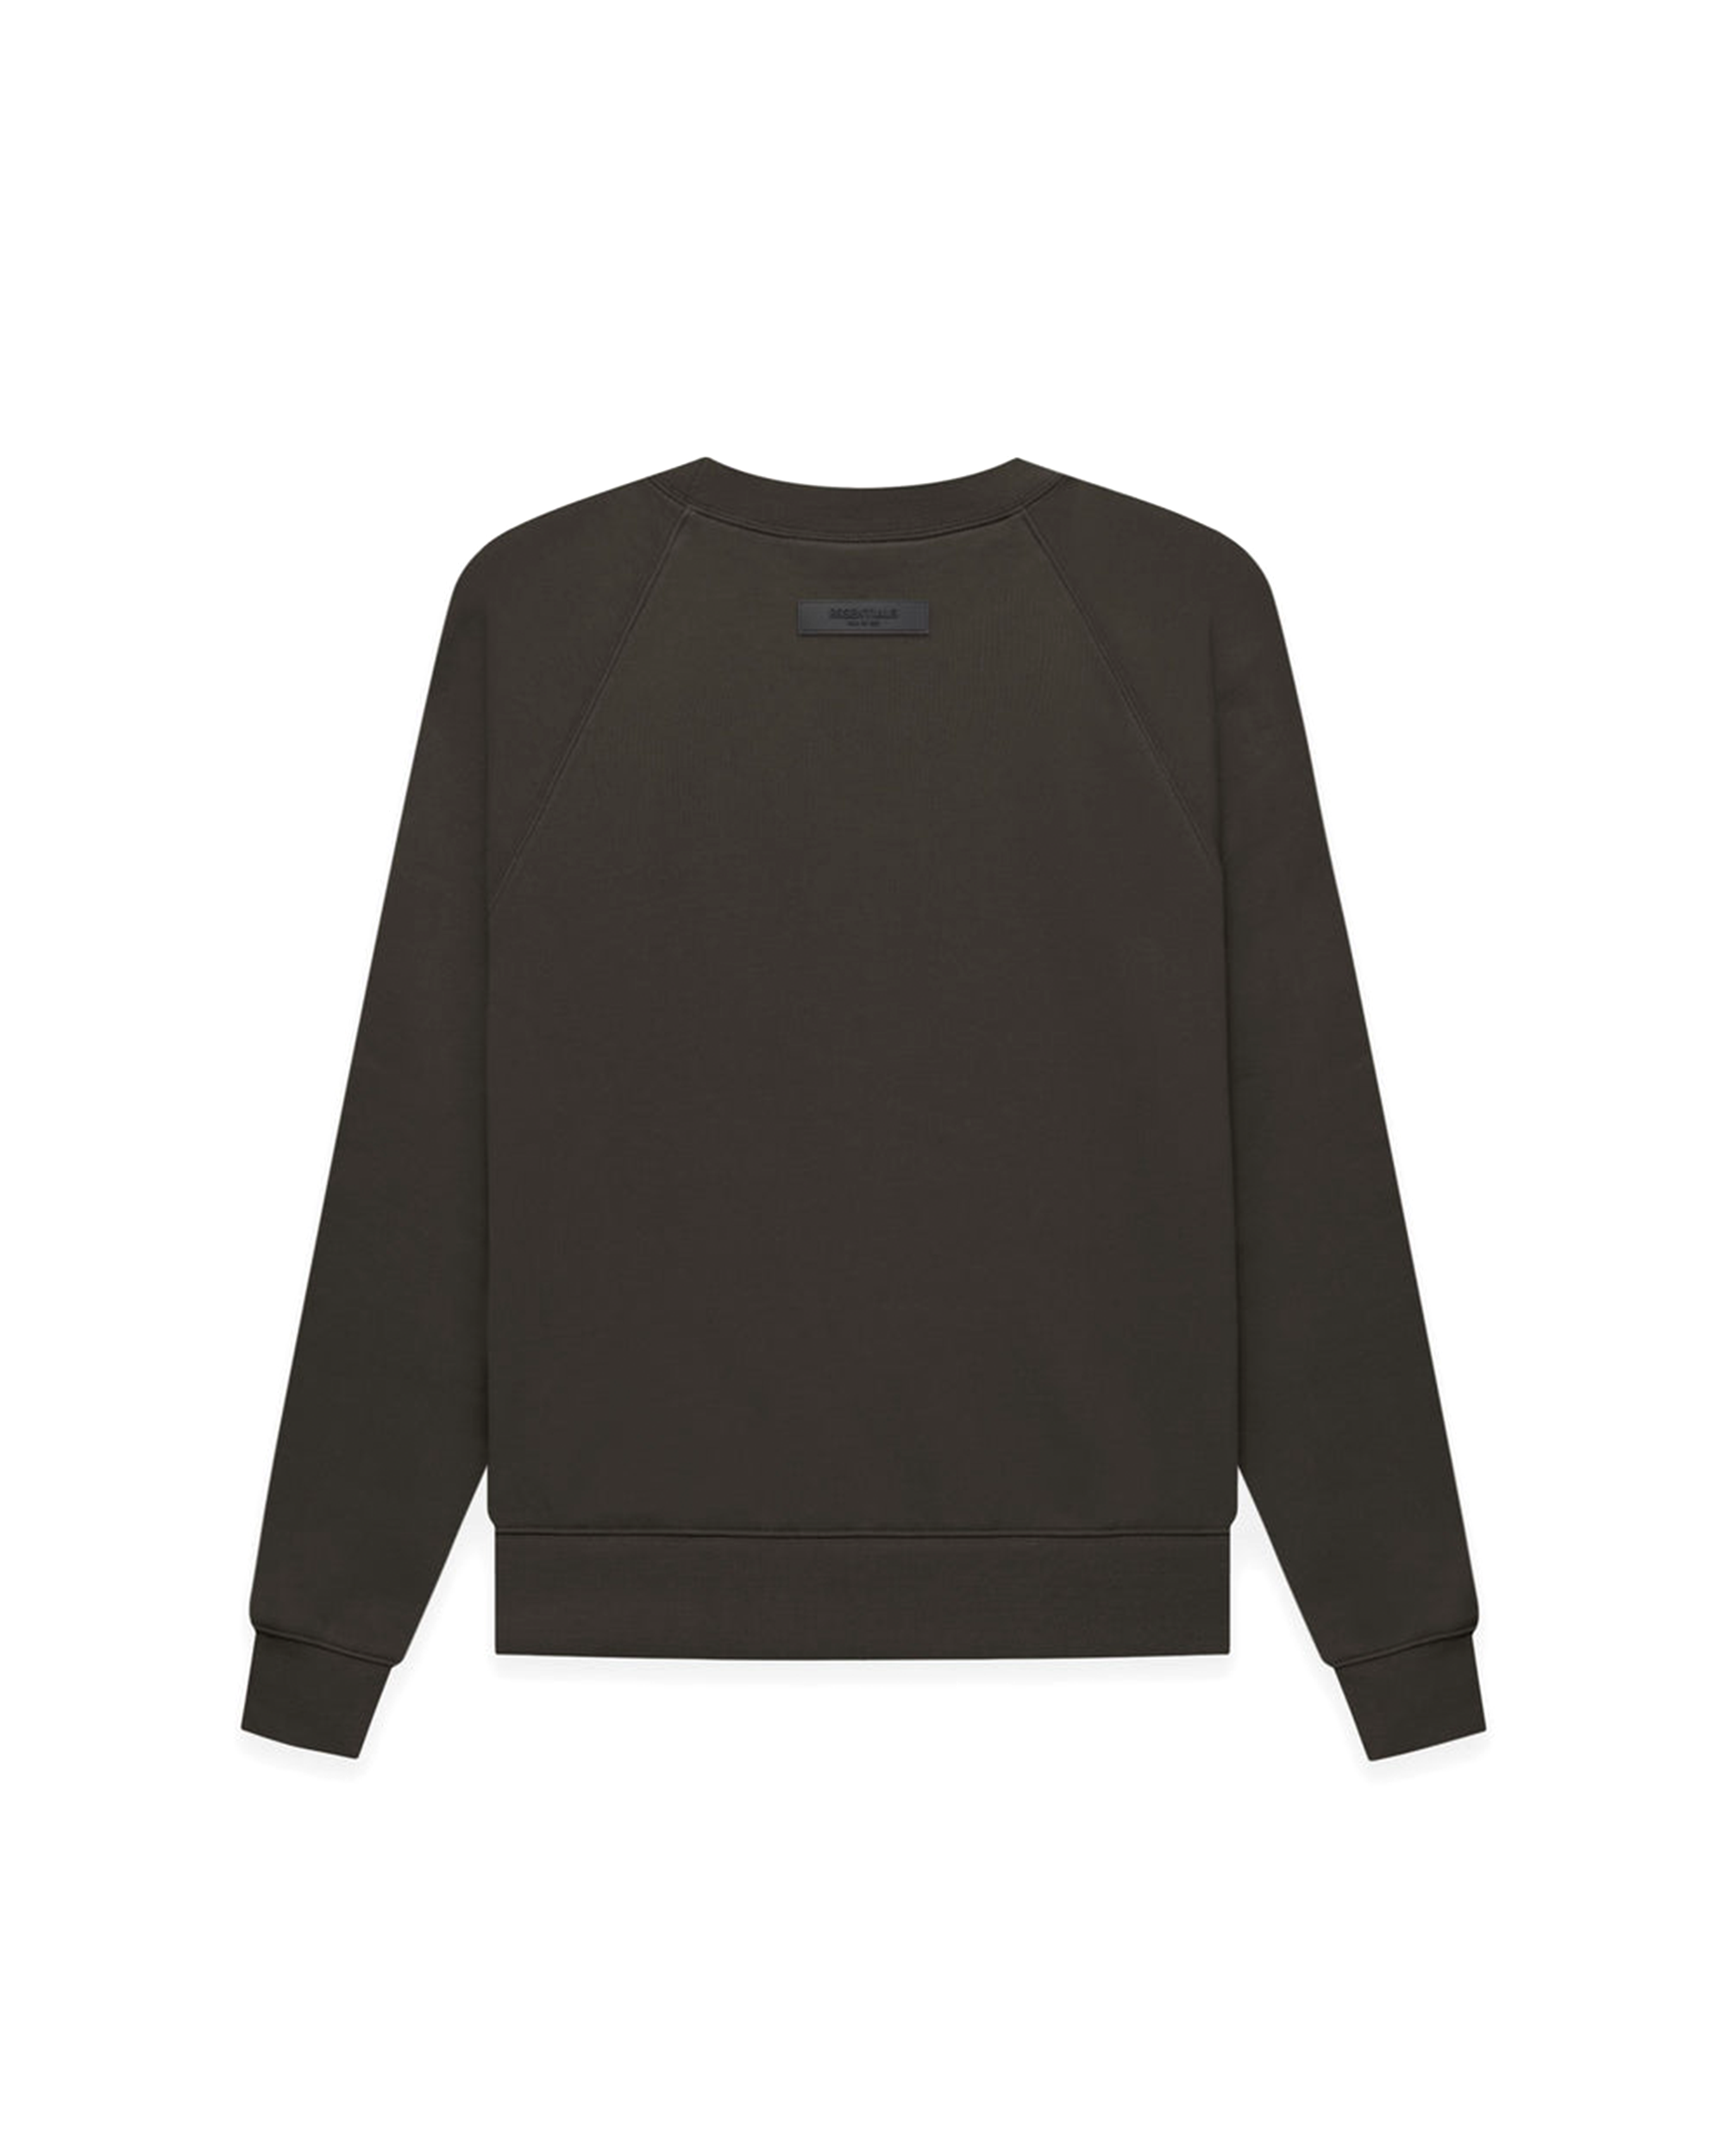 Essentials Crewneck Sweatshirt - Off Black / Off Black